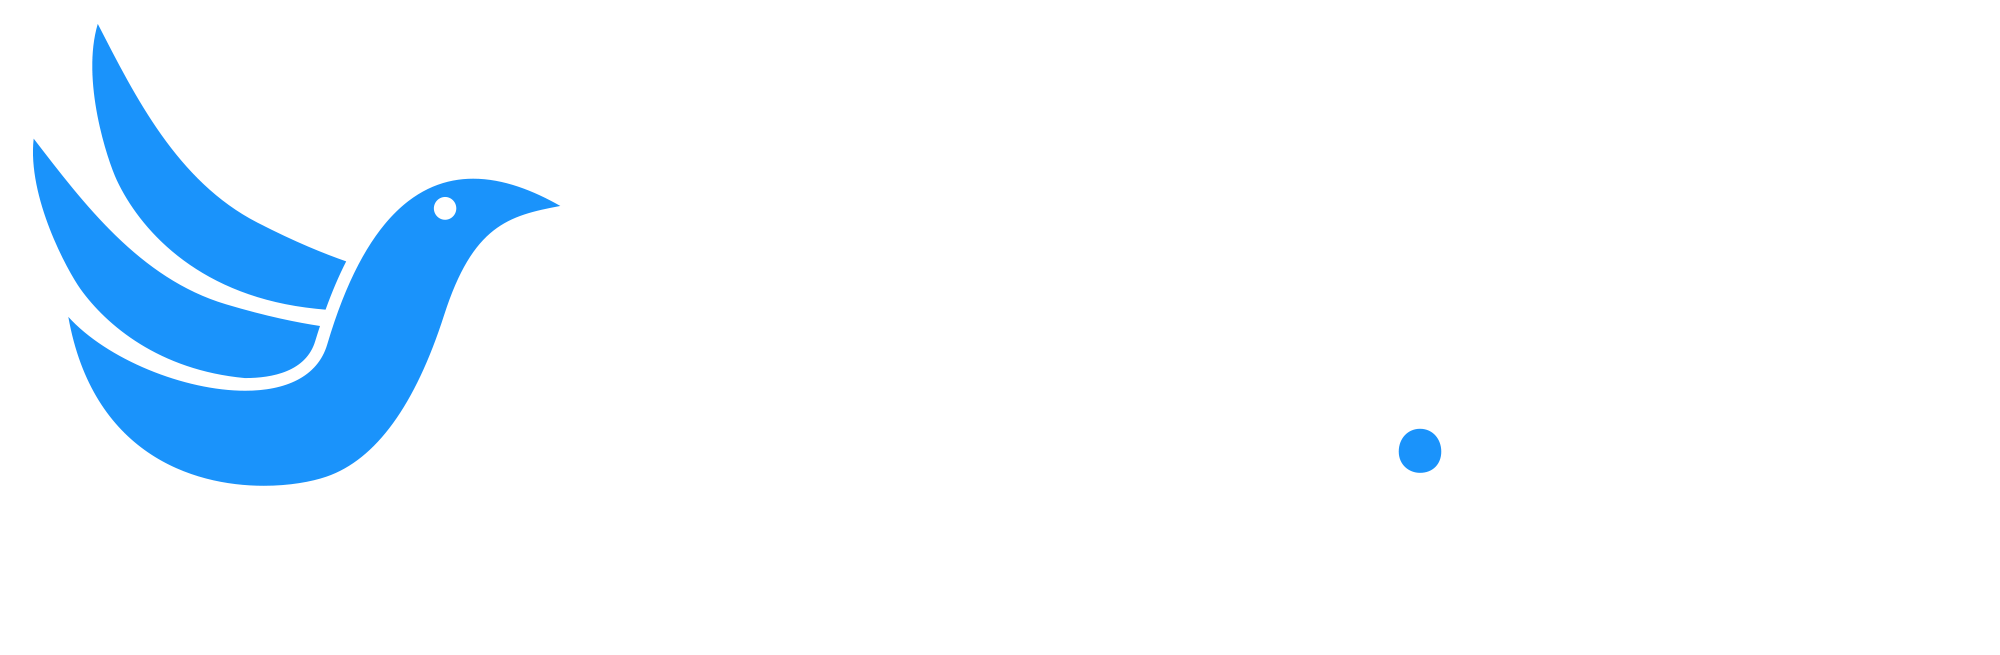 ebook_logo